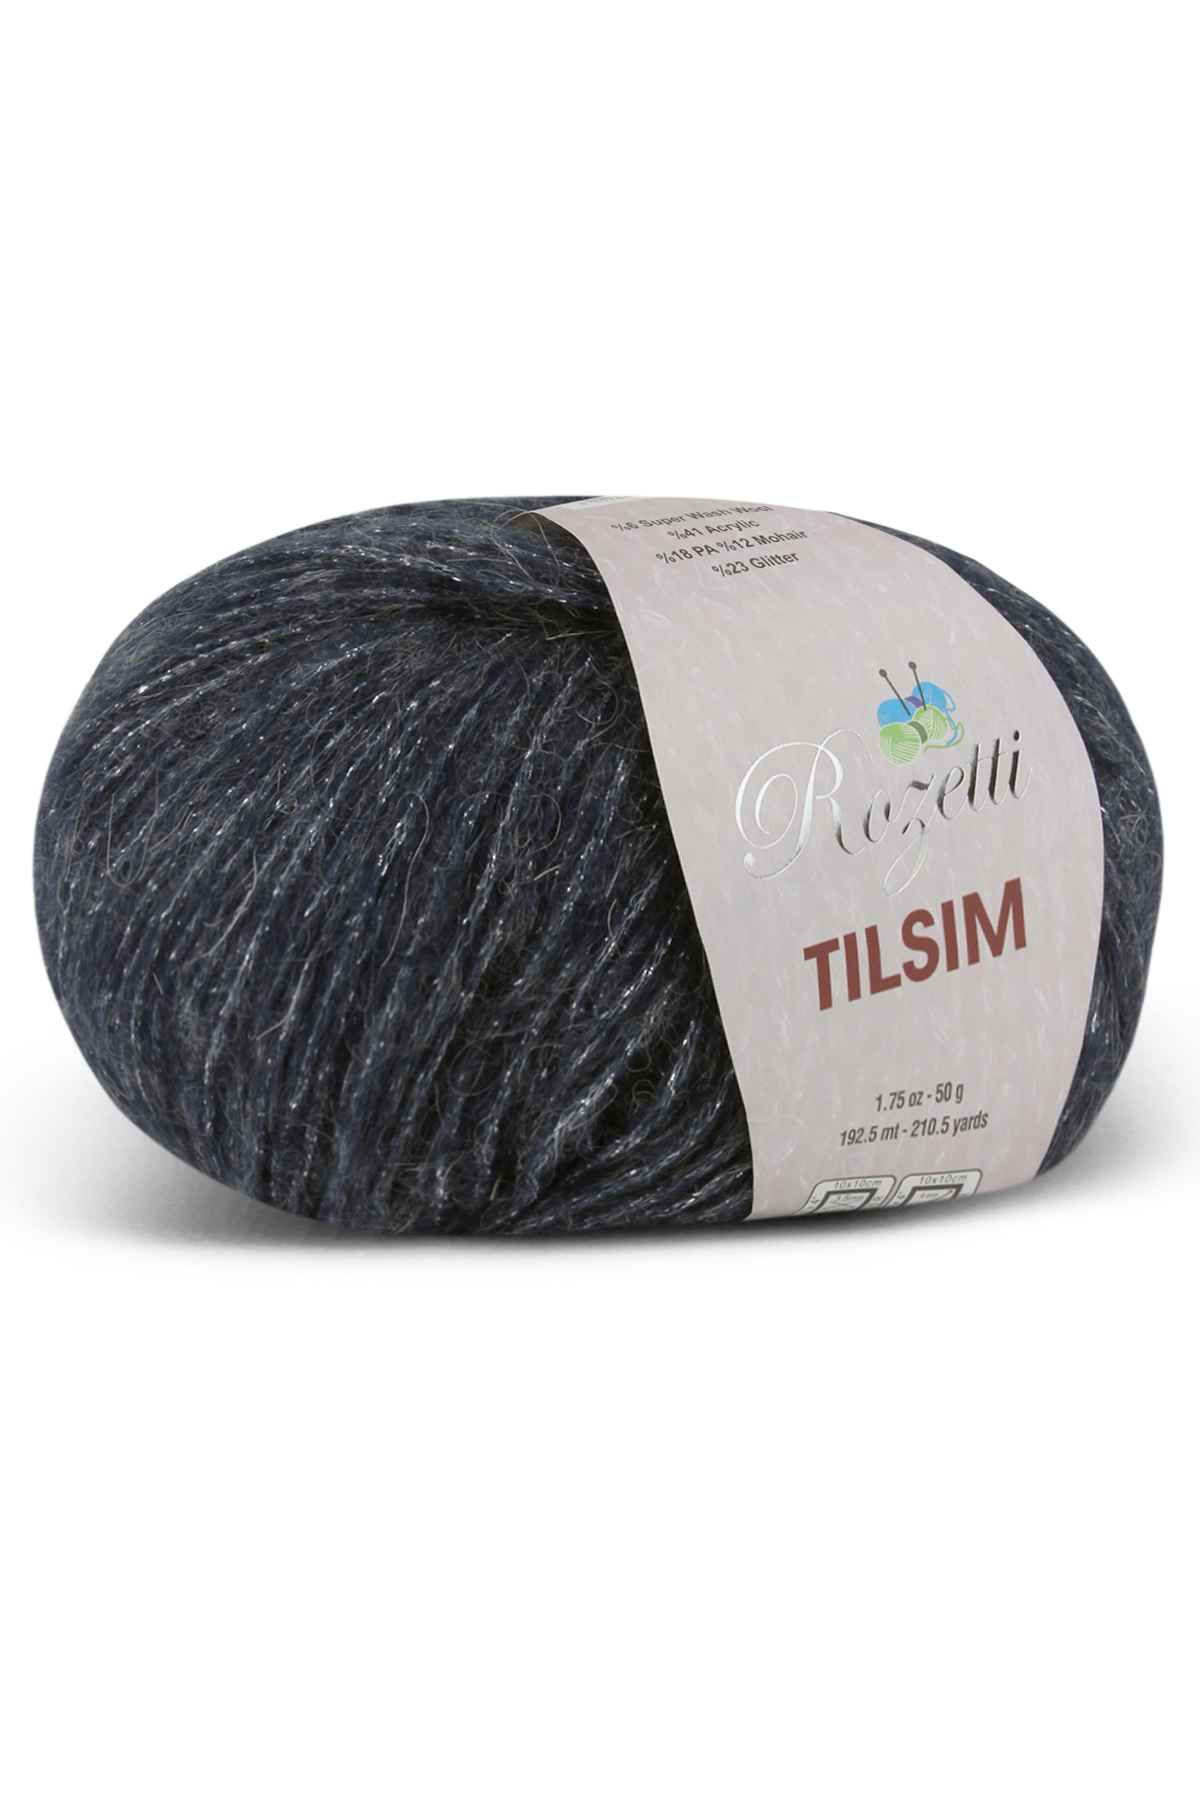 Rozetti Tılsım Wool Yarn